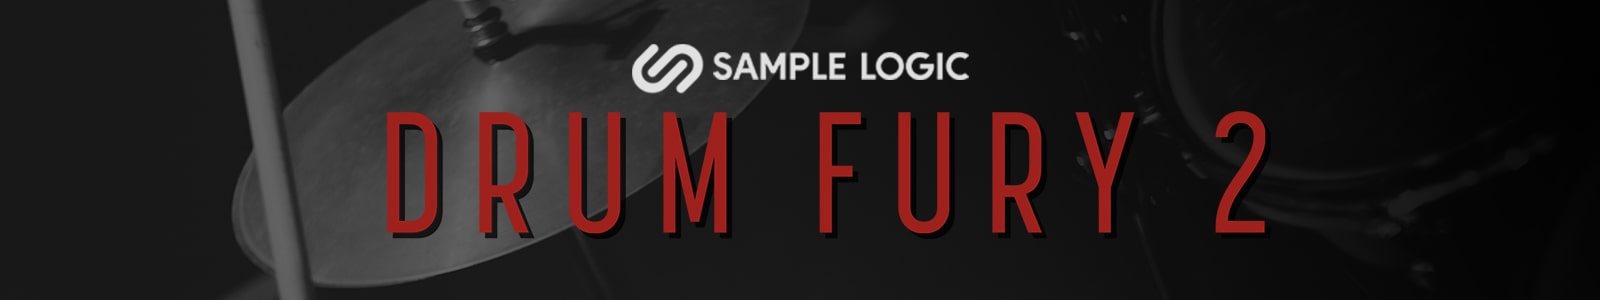 DRUM FURY 2 by Sample Logic - Audio Plugin Deals